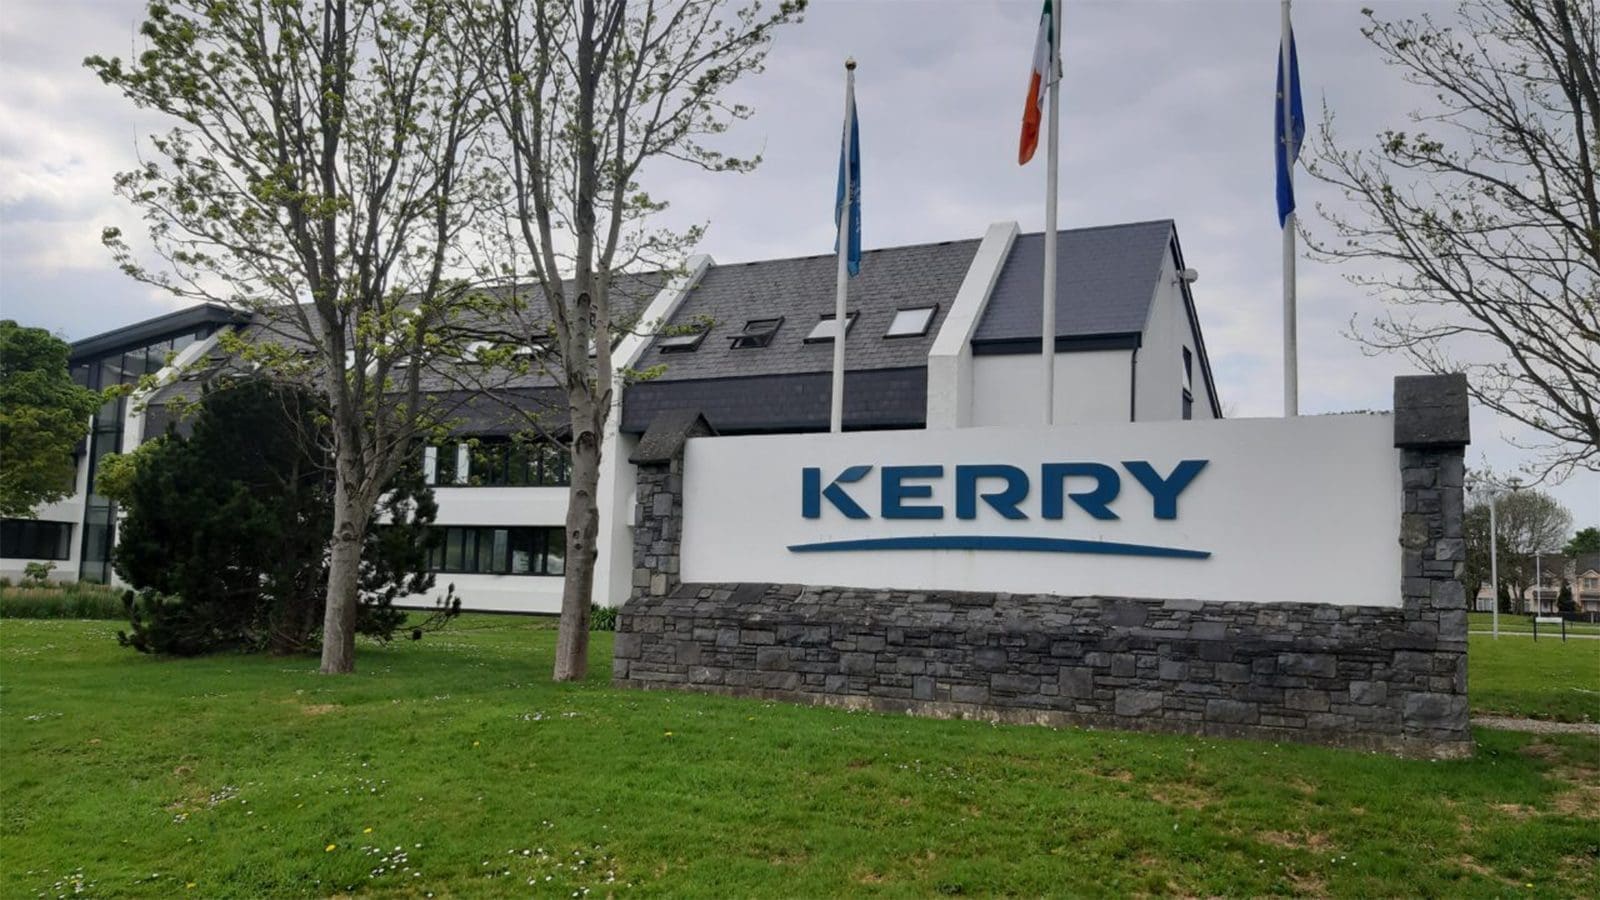 Irish multinational Kerry patrons Africa Food Safety Summit 2022